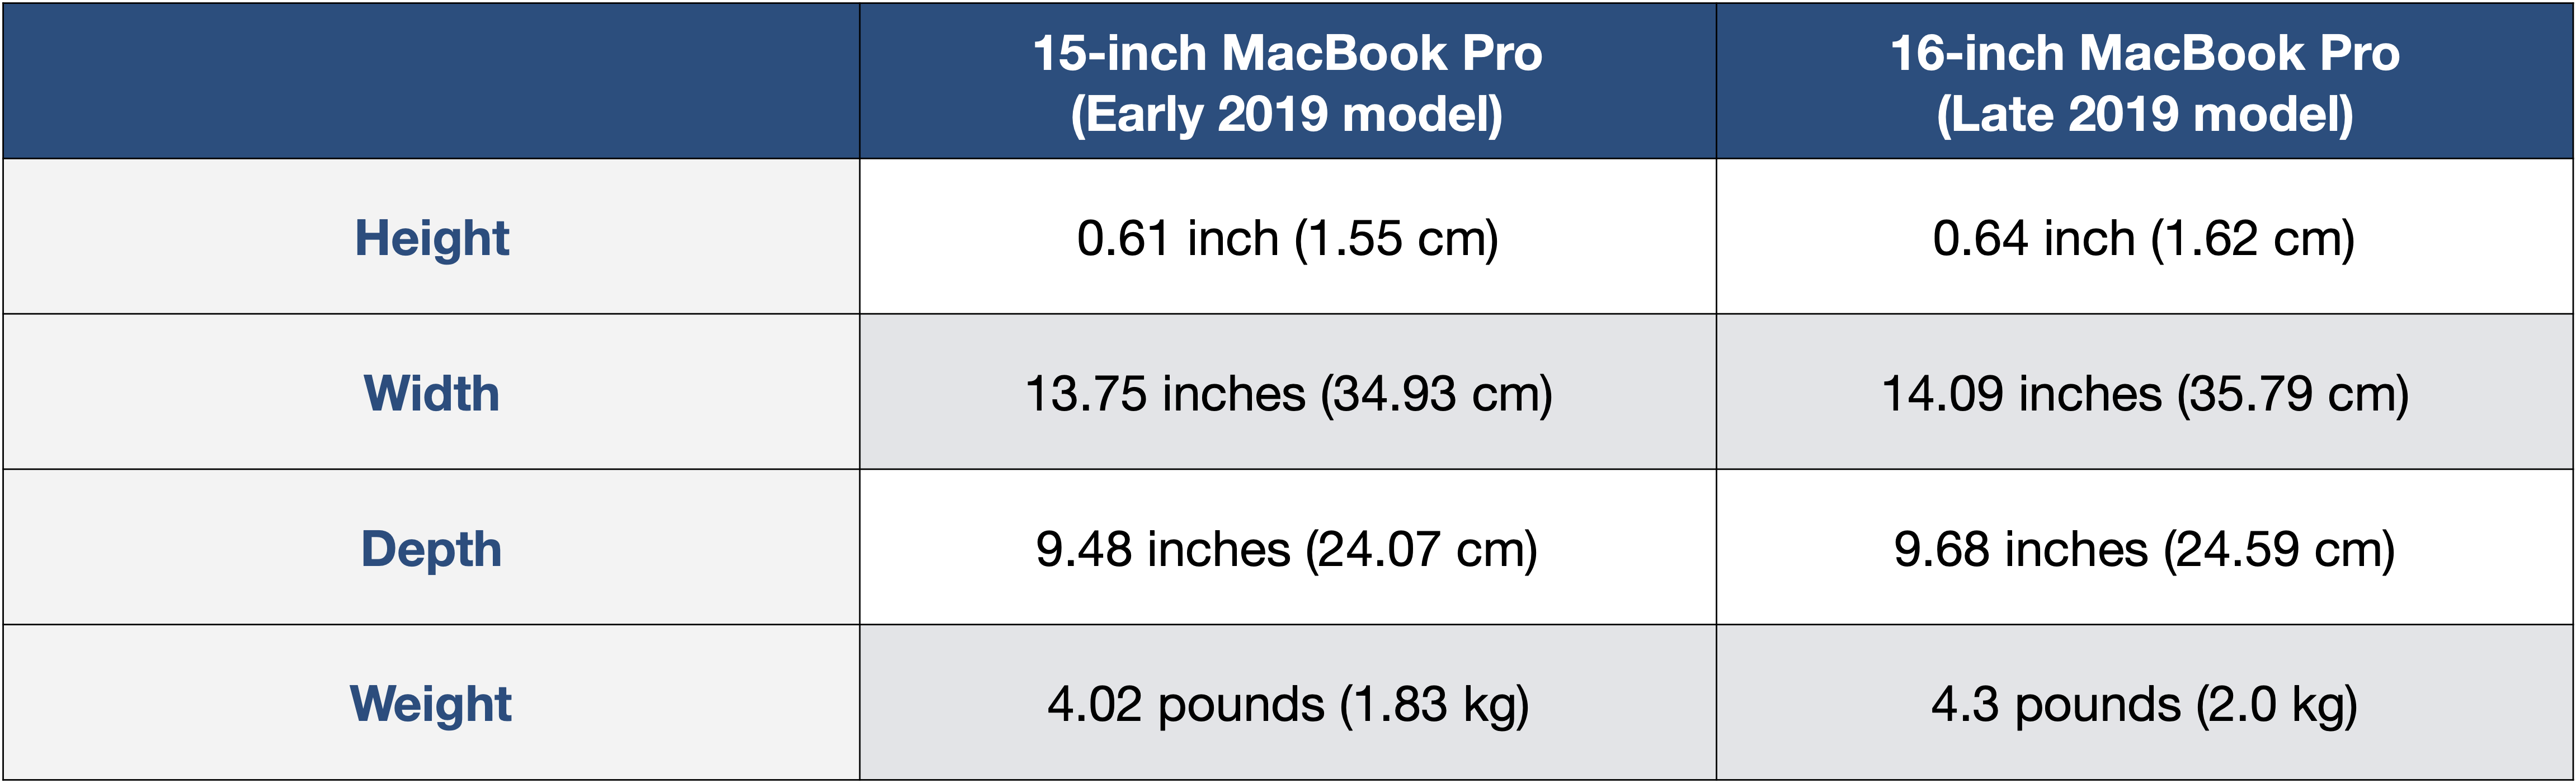 15 macbook pro dimensions 2010